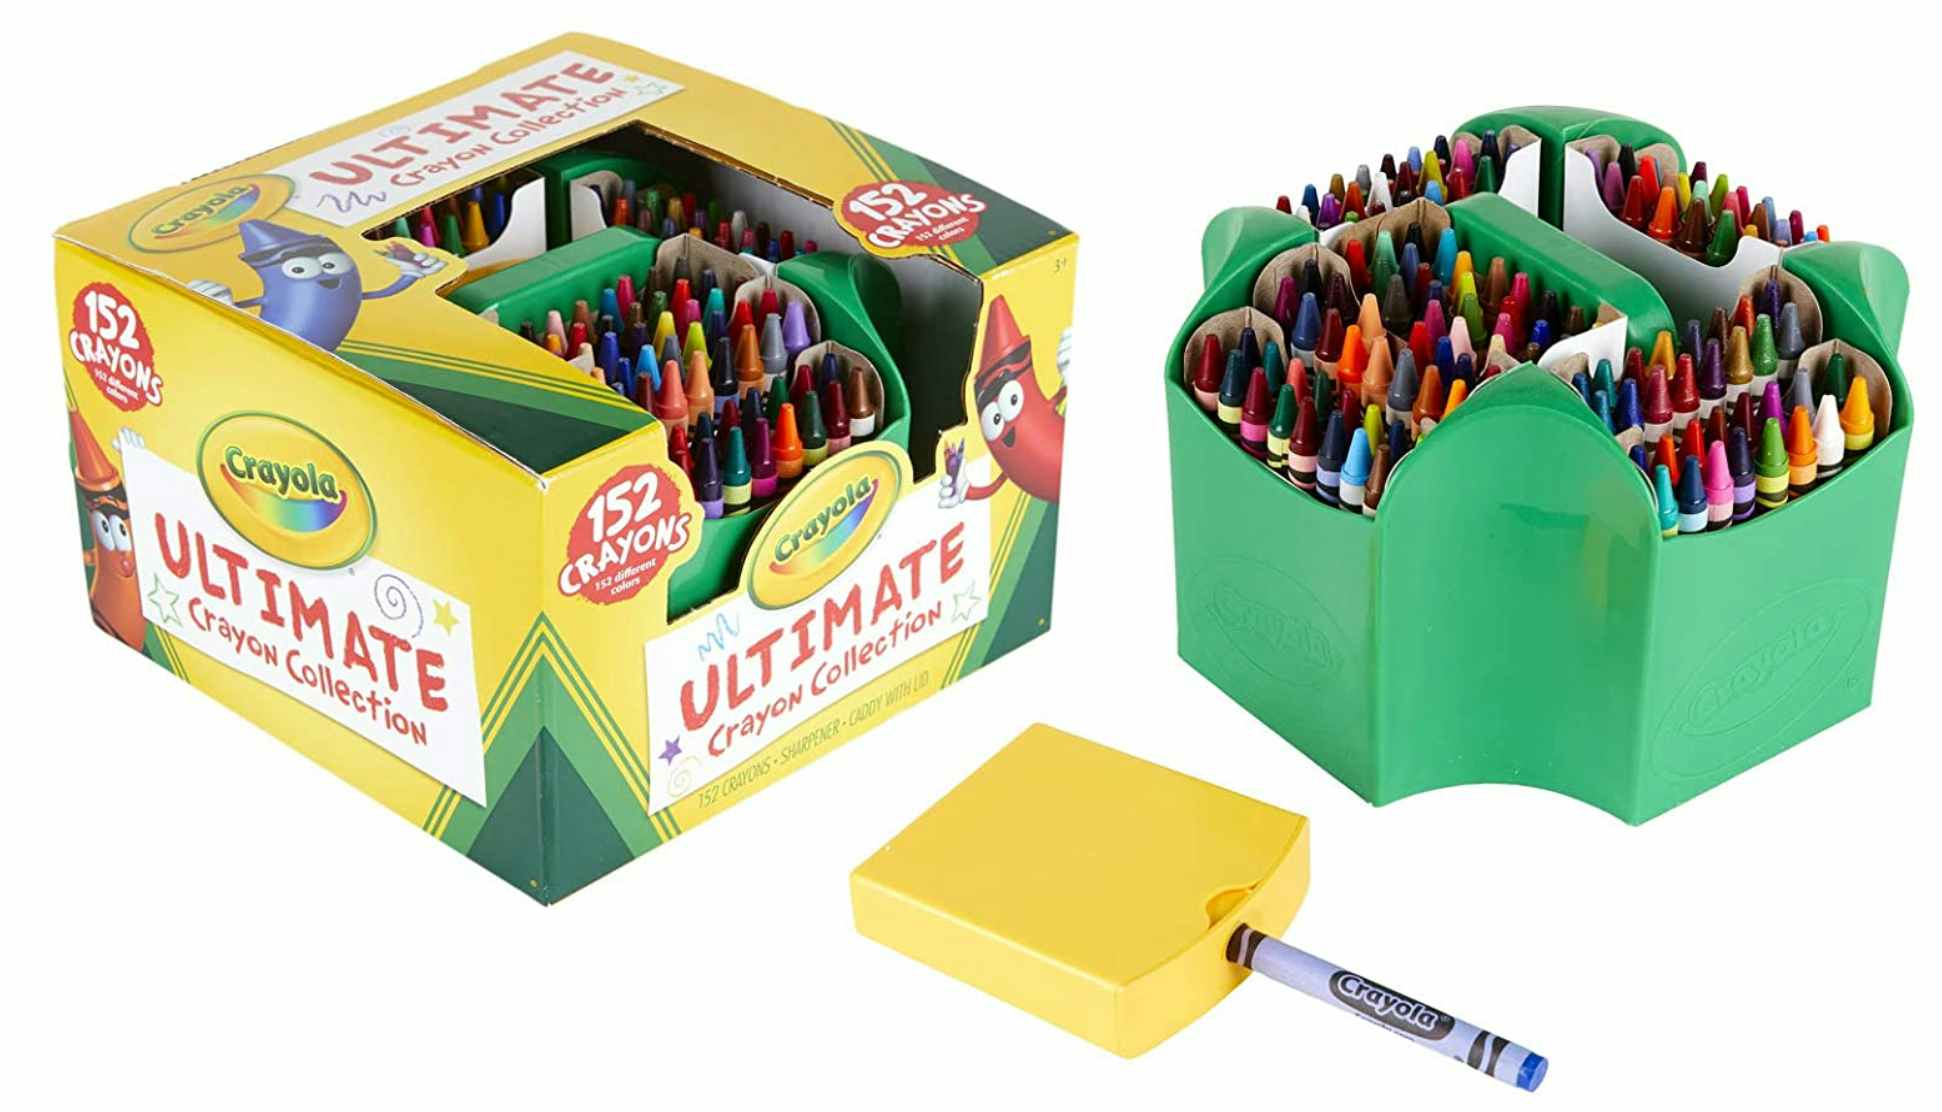 Crayola Crayola Ultimate Crayon Collection